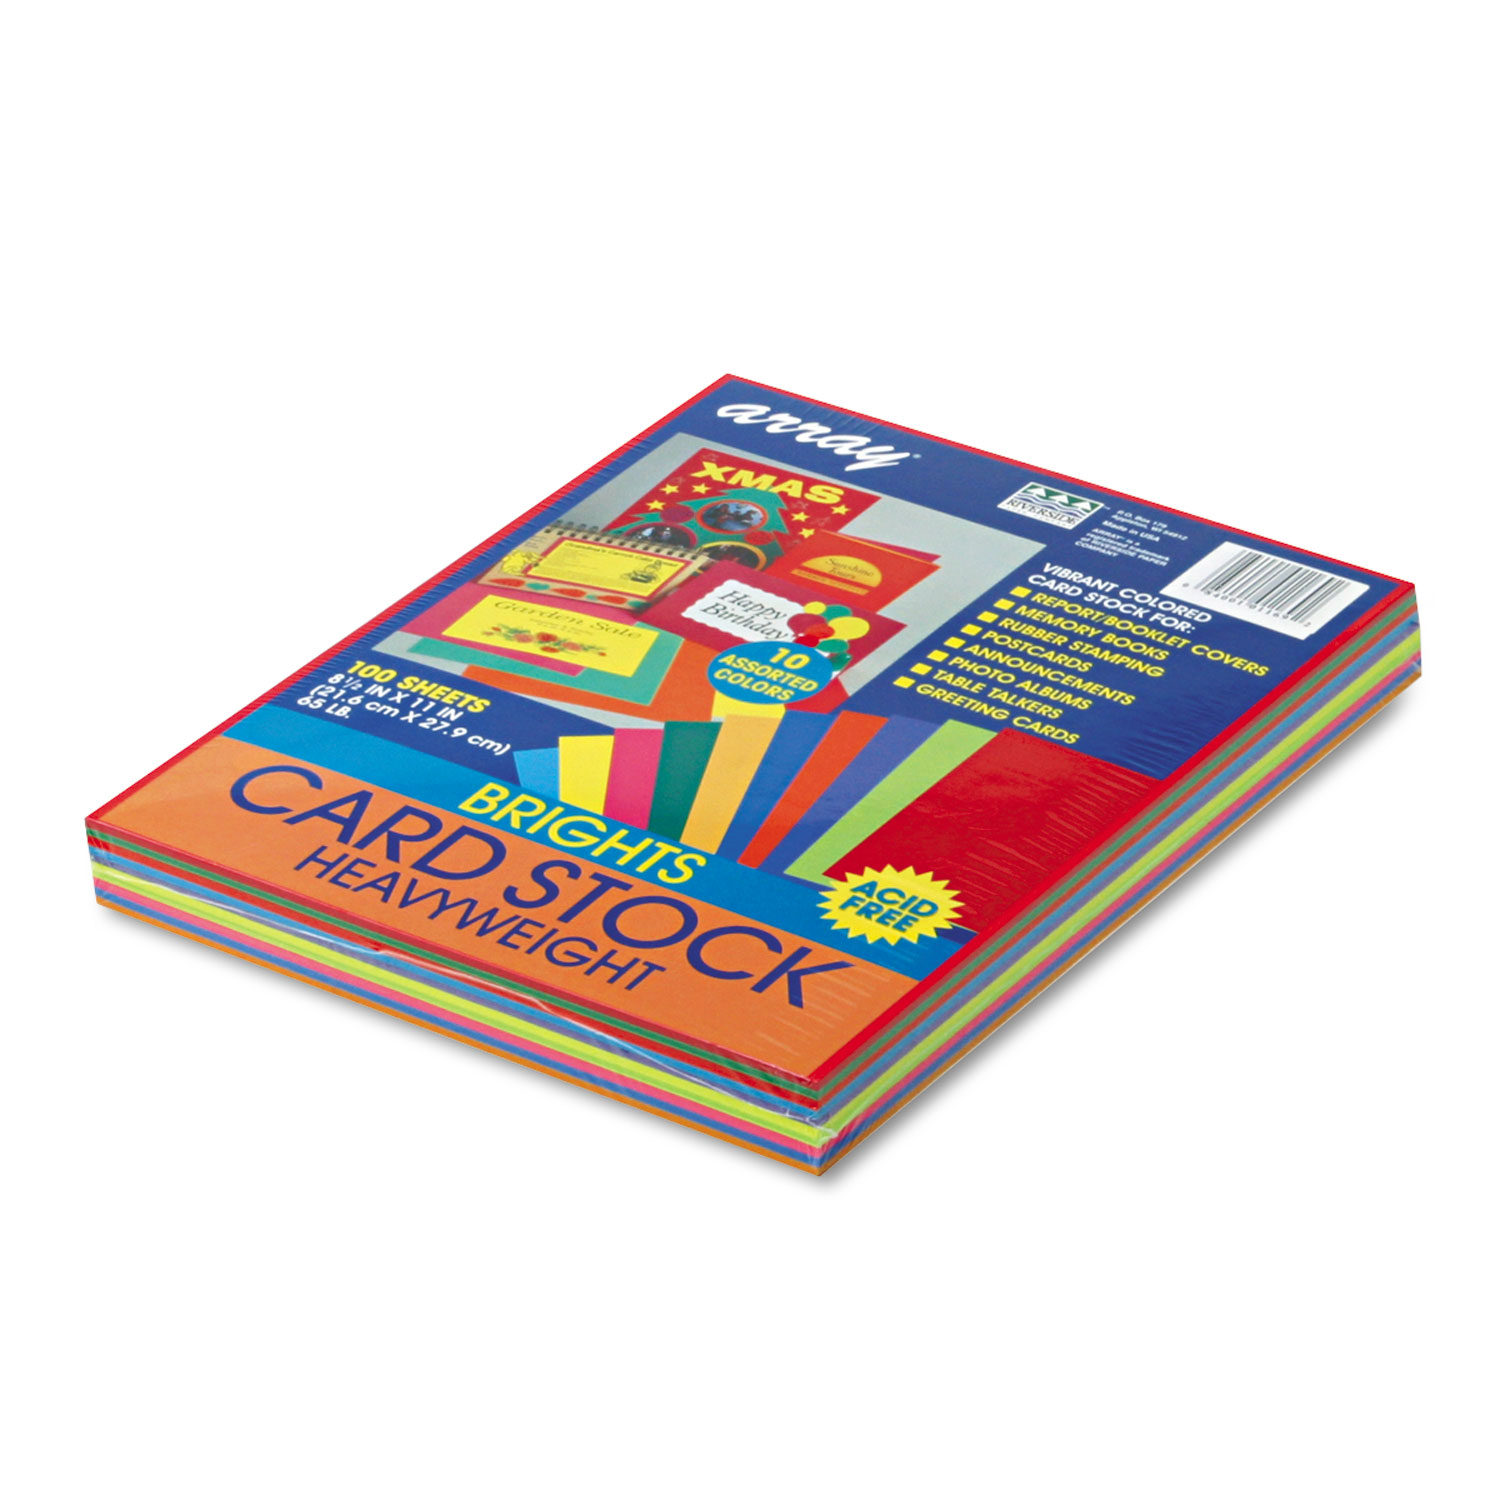 Astrobrights Colored Cardstock, 8.5 x 11, 65 lb., Happy Assortment, 250  Sheets - Zerbee